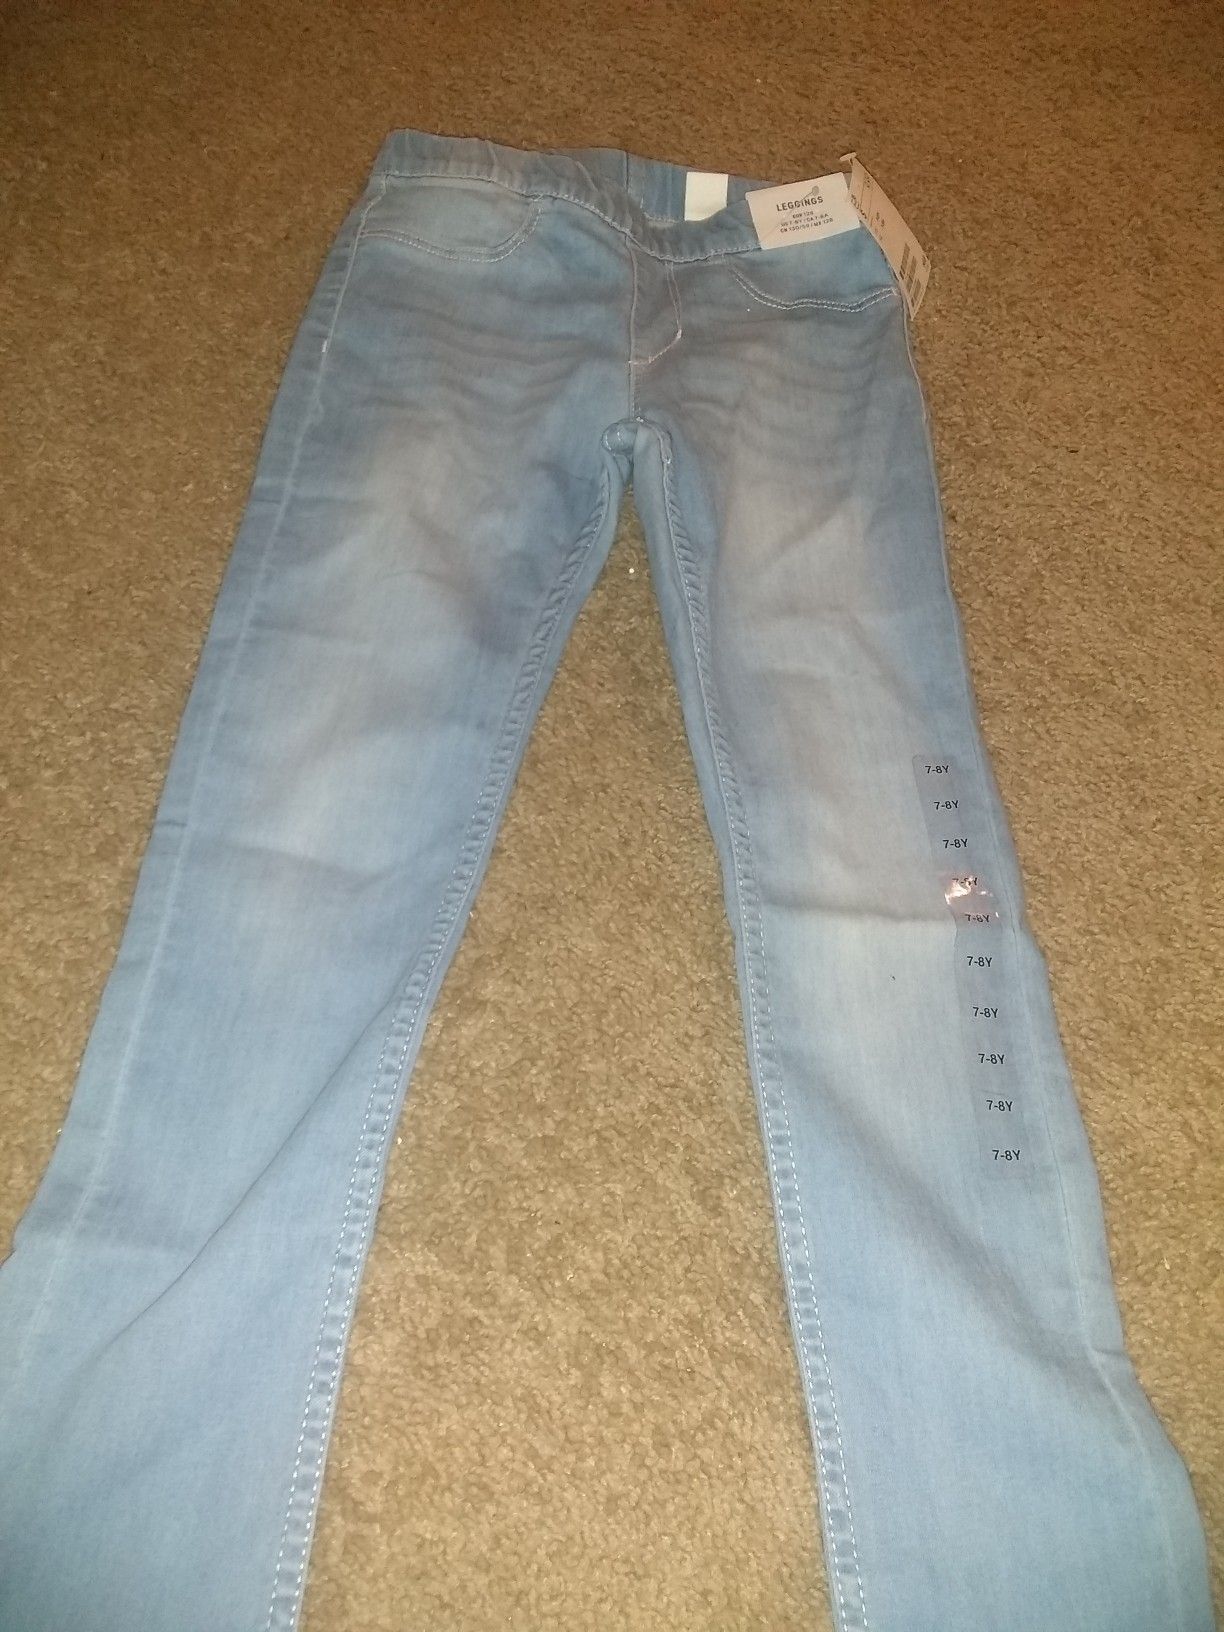 Girls denim jeans size 7/8